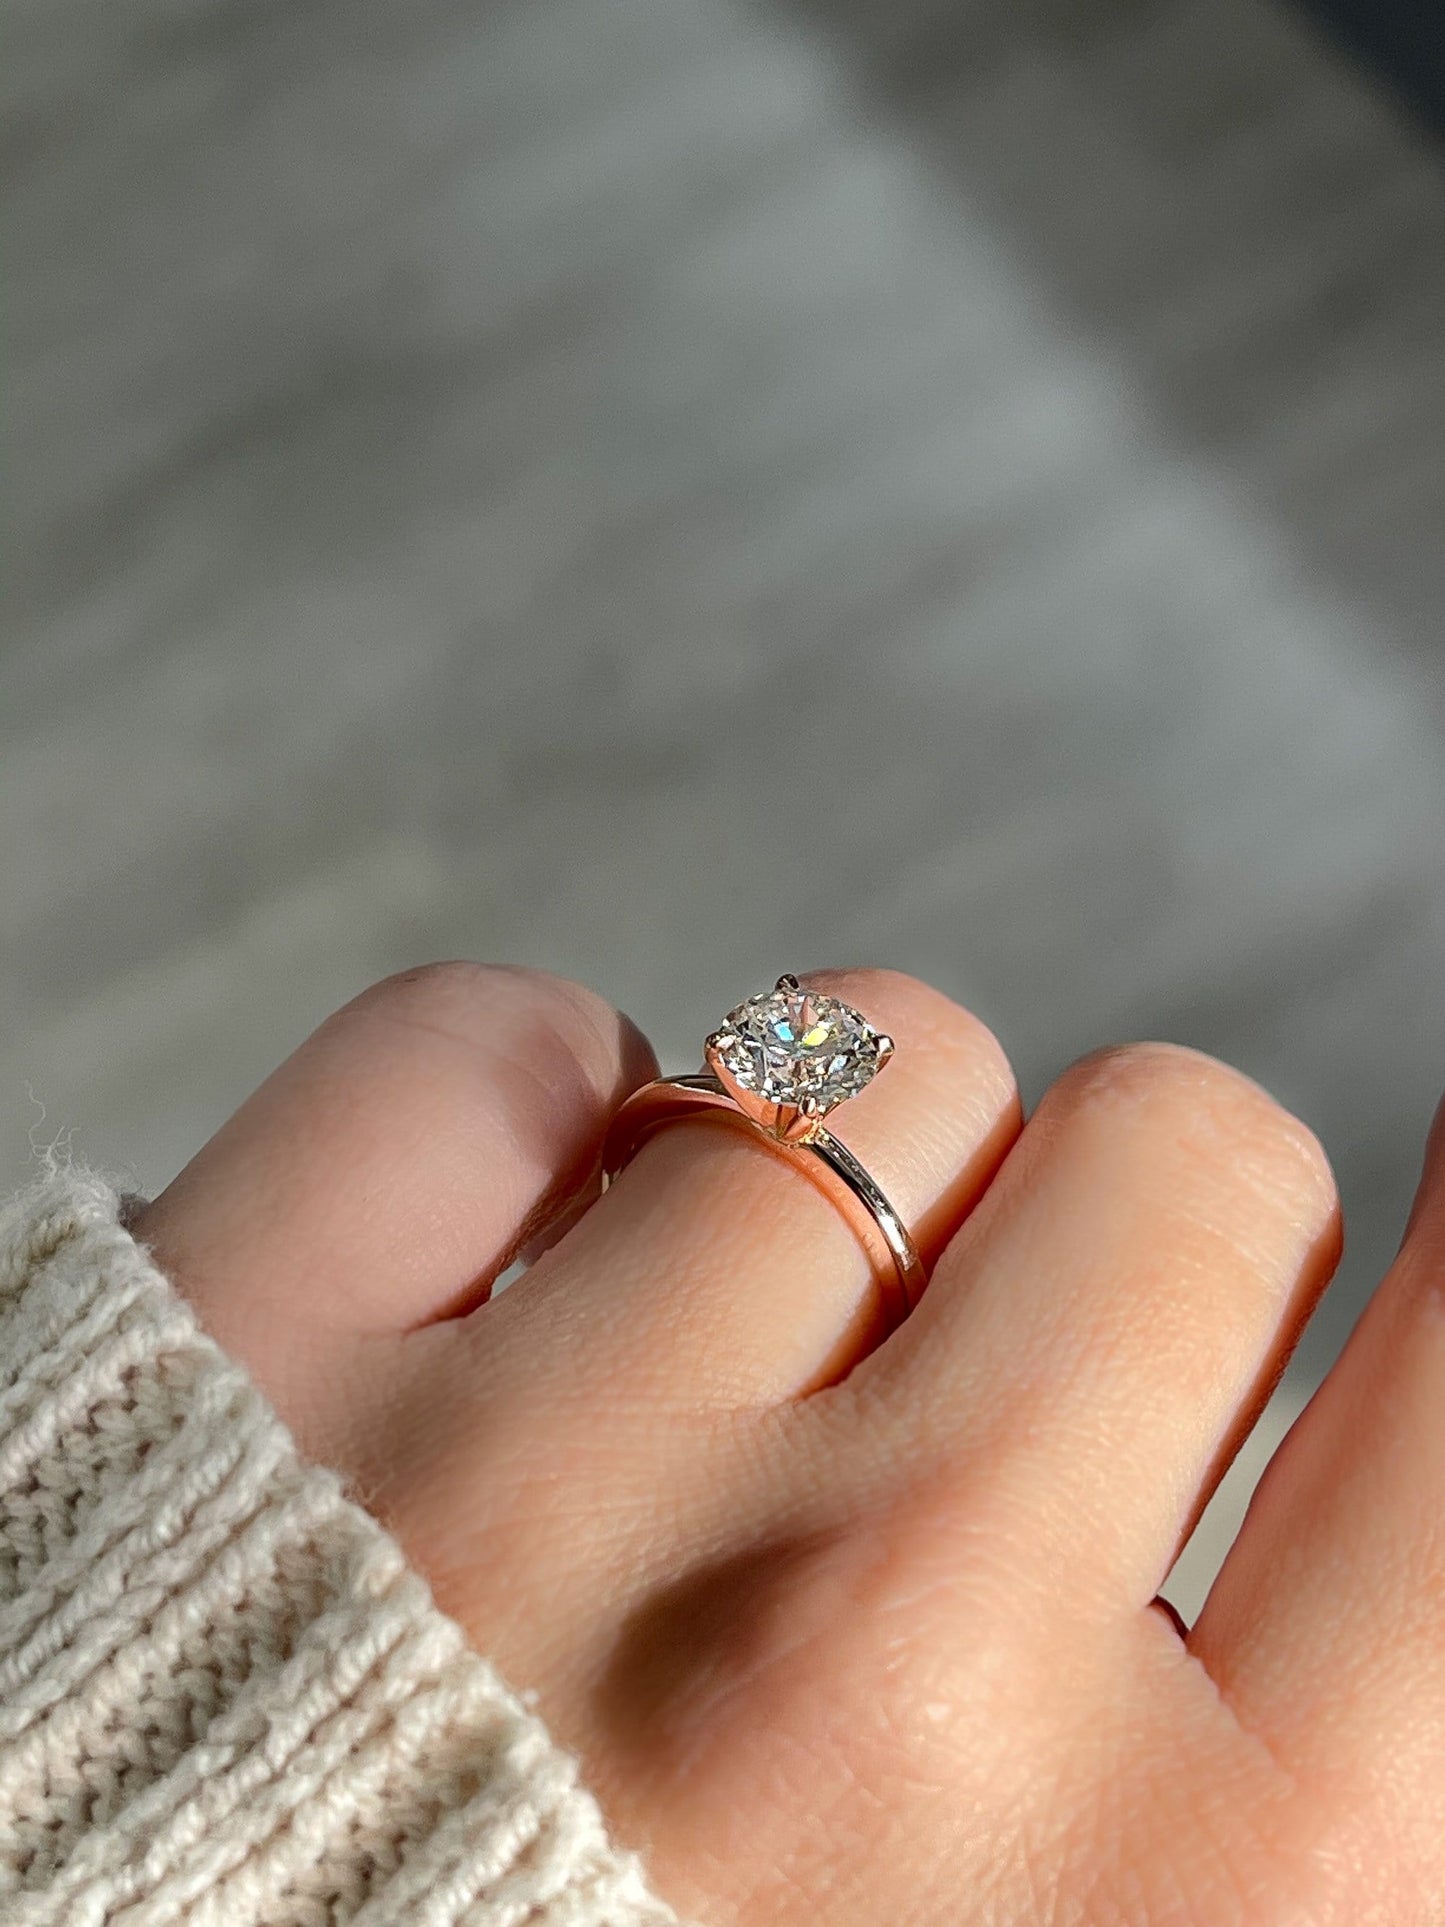 Oval Diamond Engagement Ring set in 18kt Rose Gold | eBay